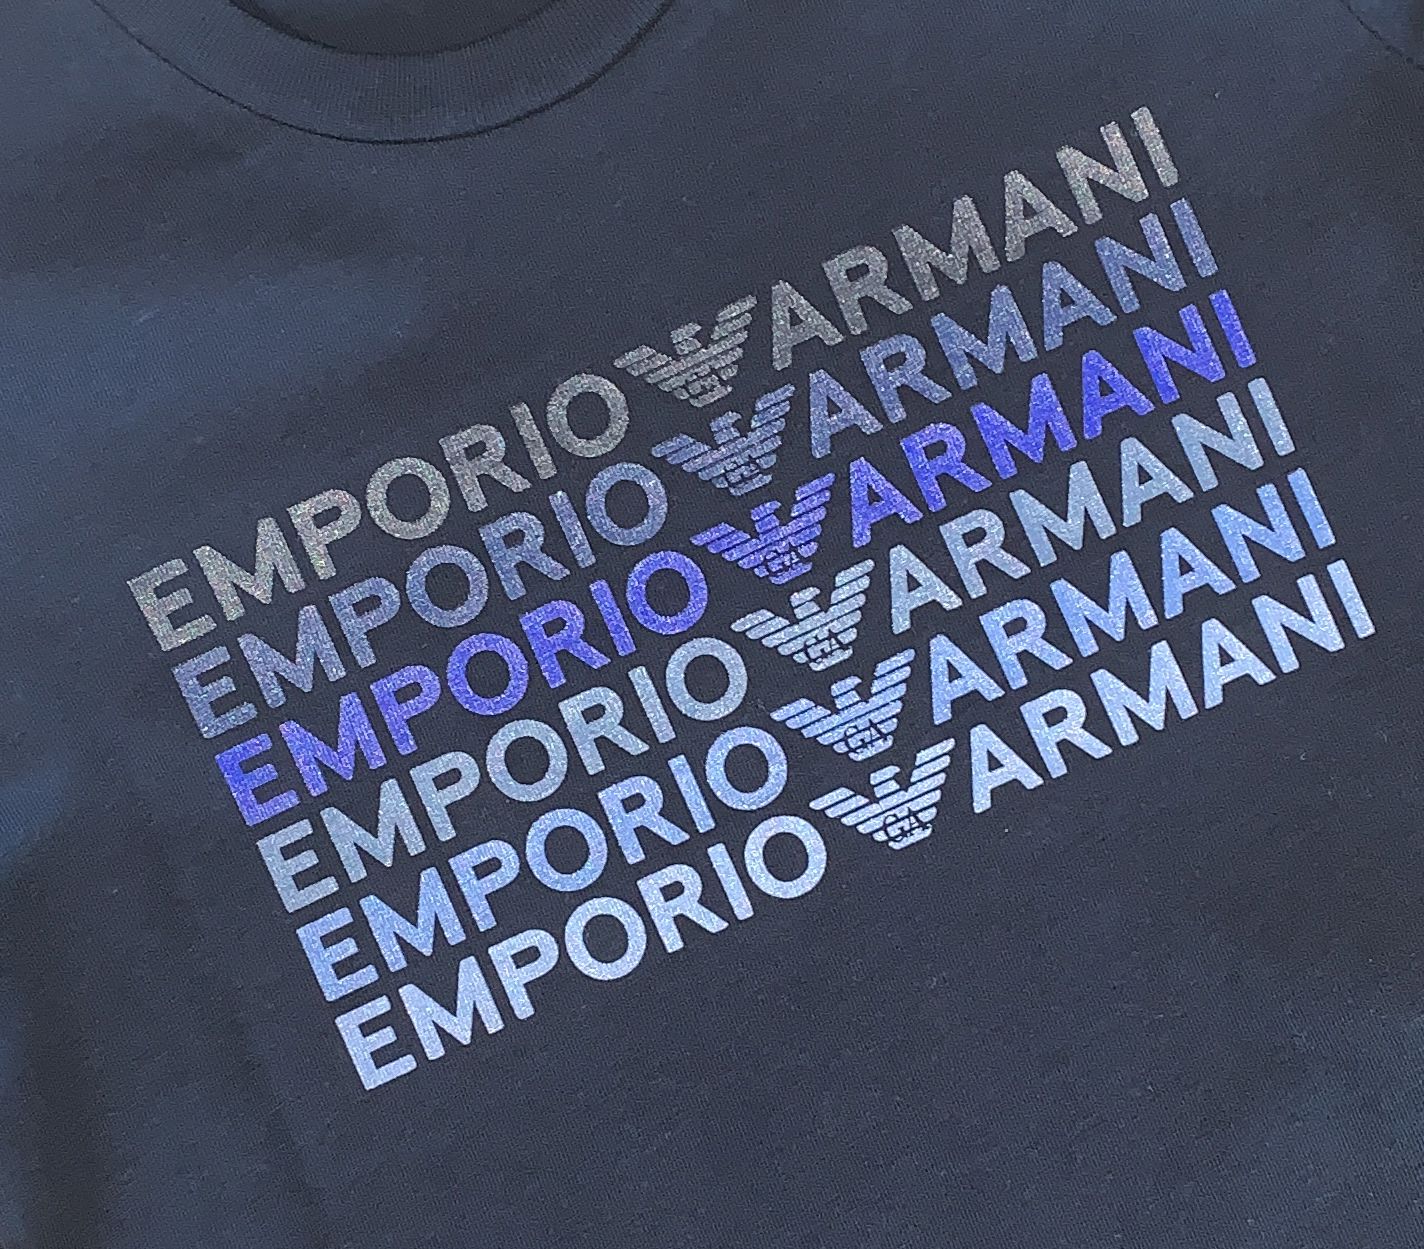 Armani Junior Long Sleeve Multi Logo T-Shirt